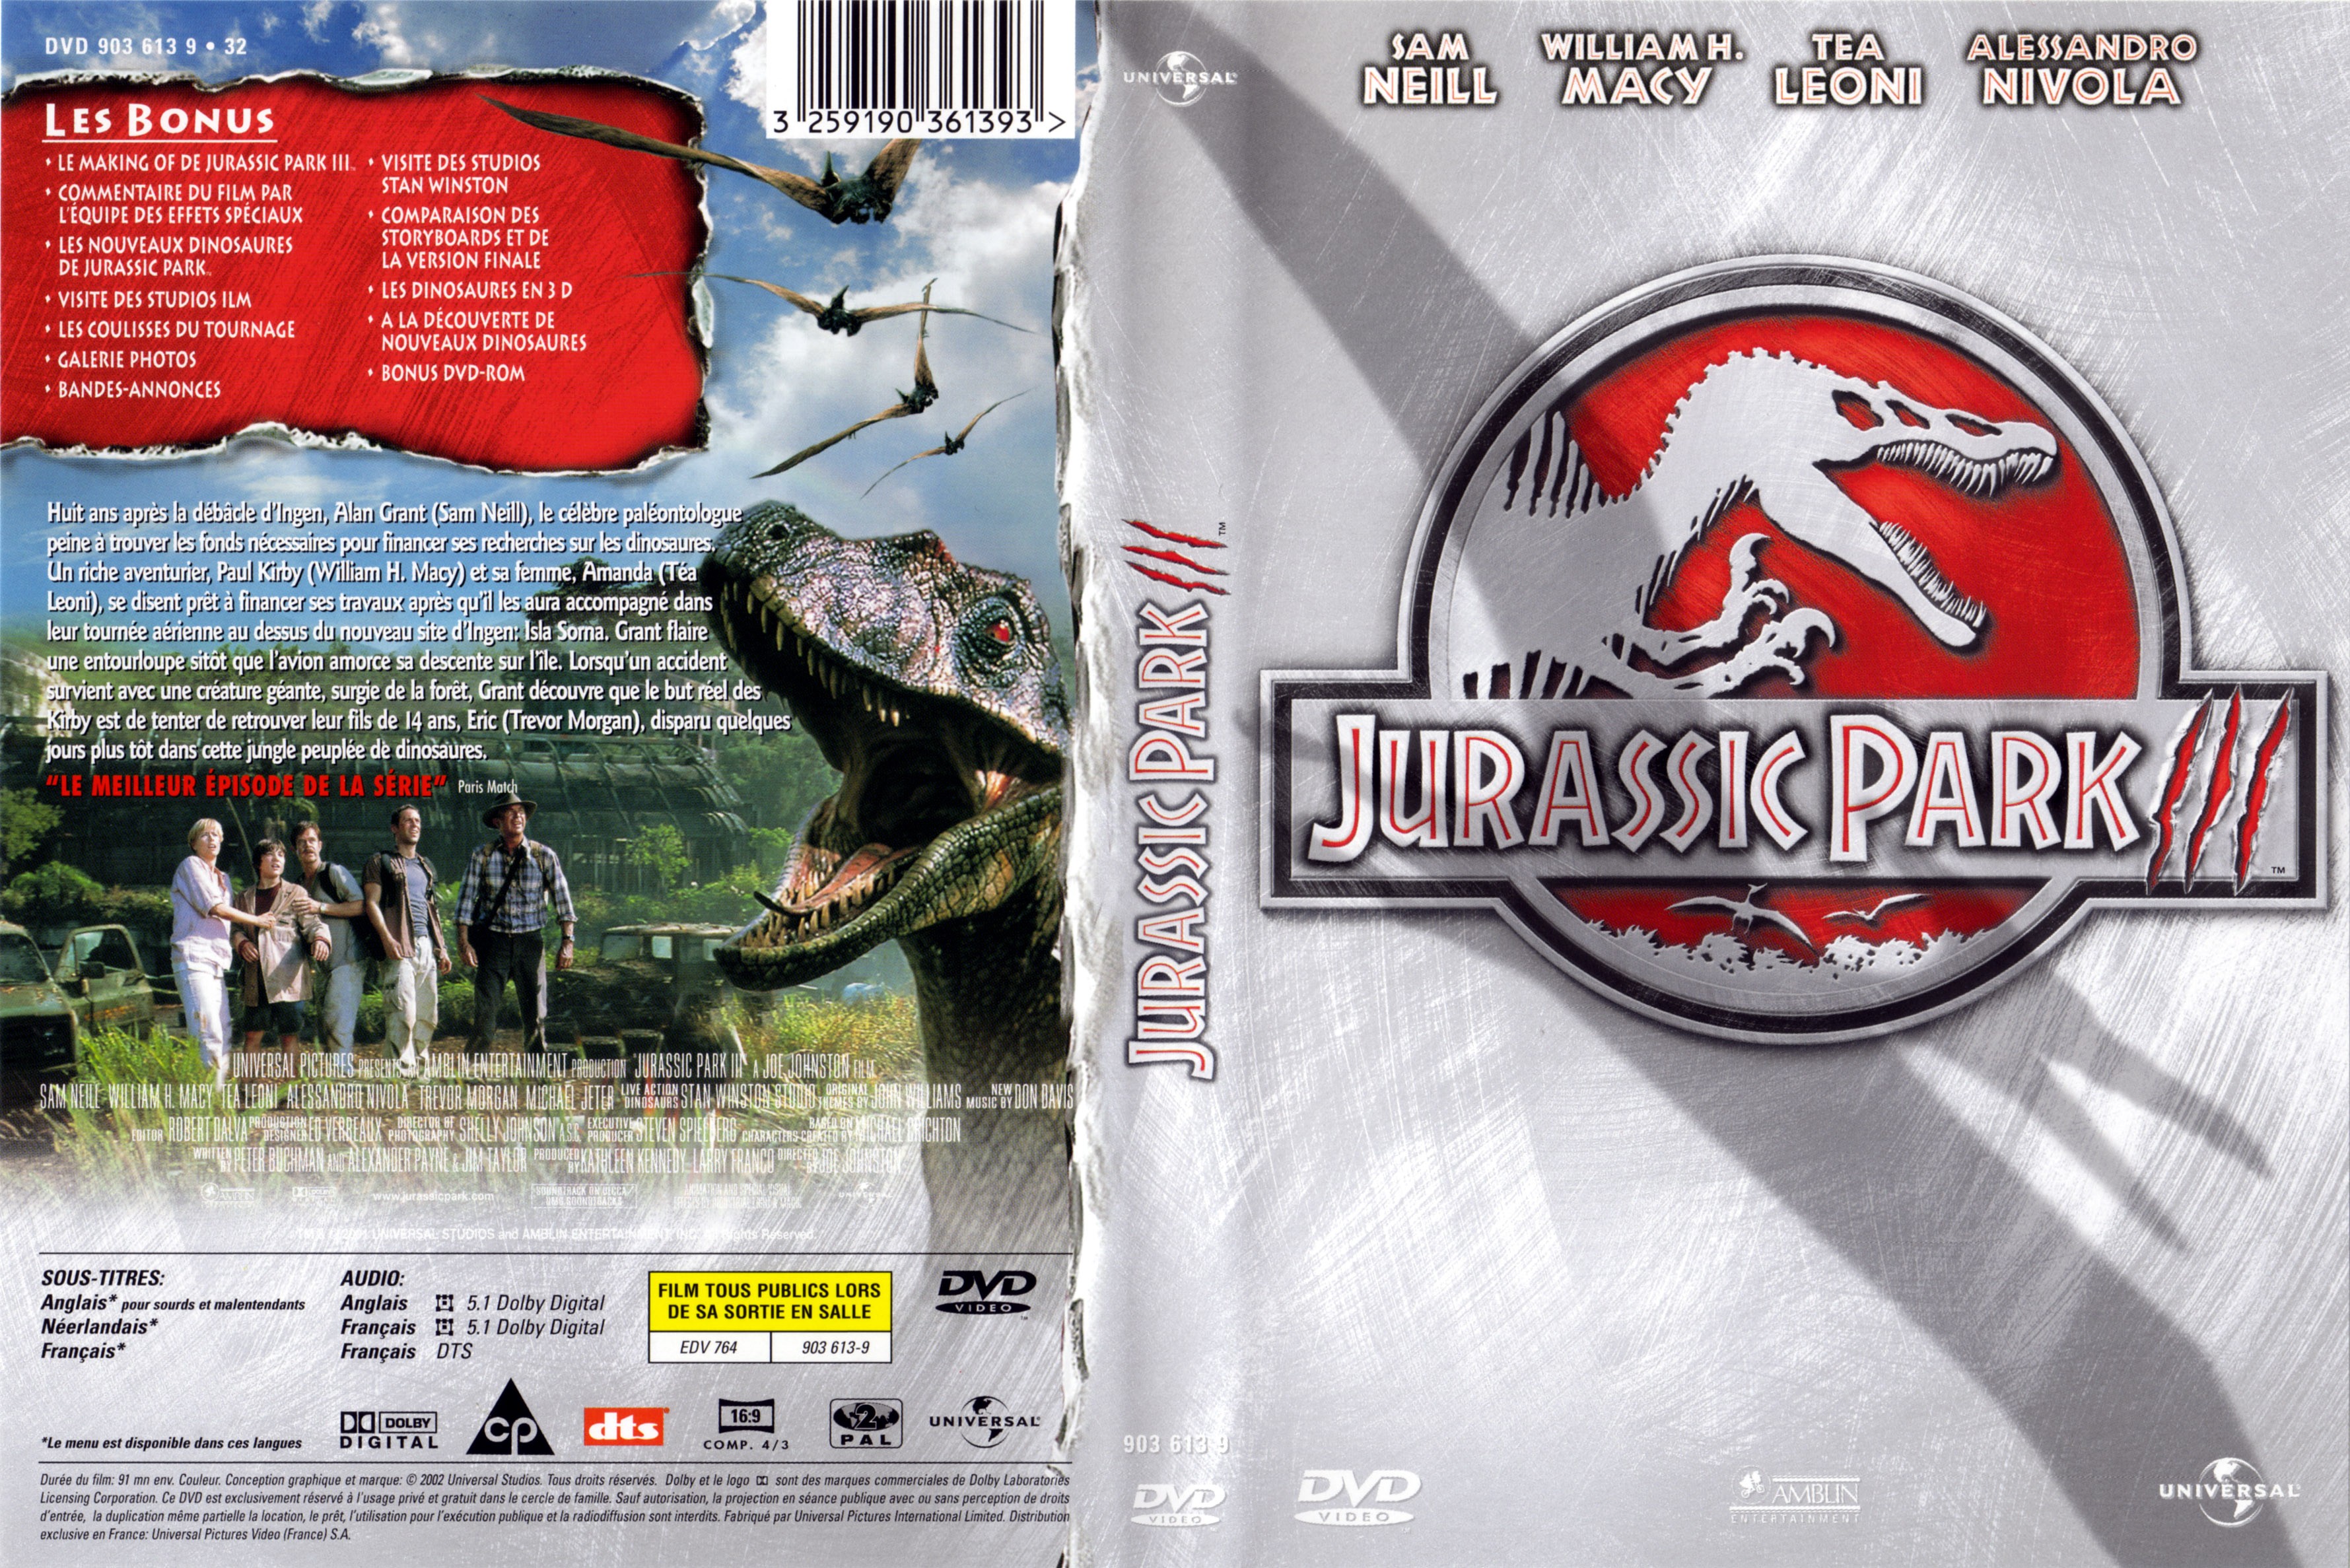 Jaquette DVD Jurassic Park 3 v2